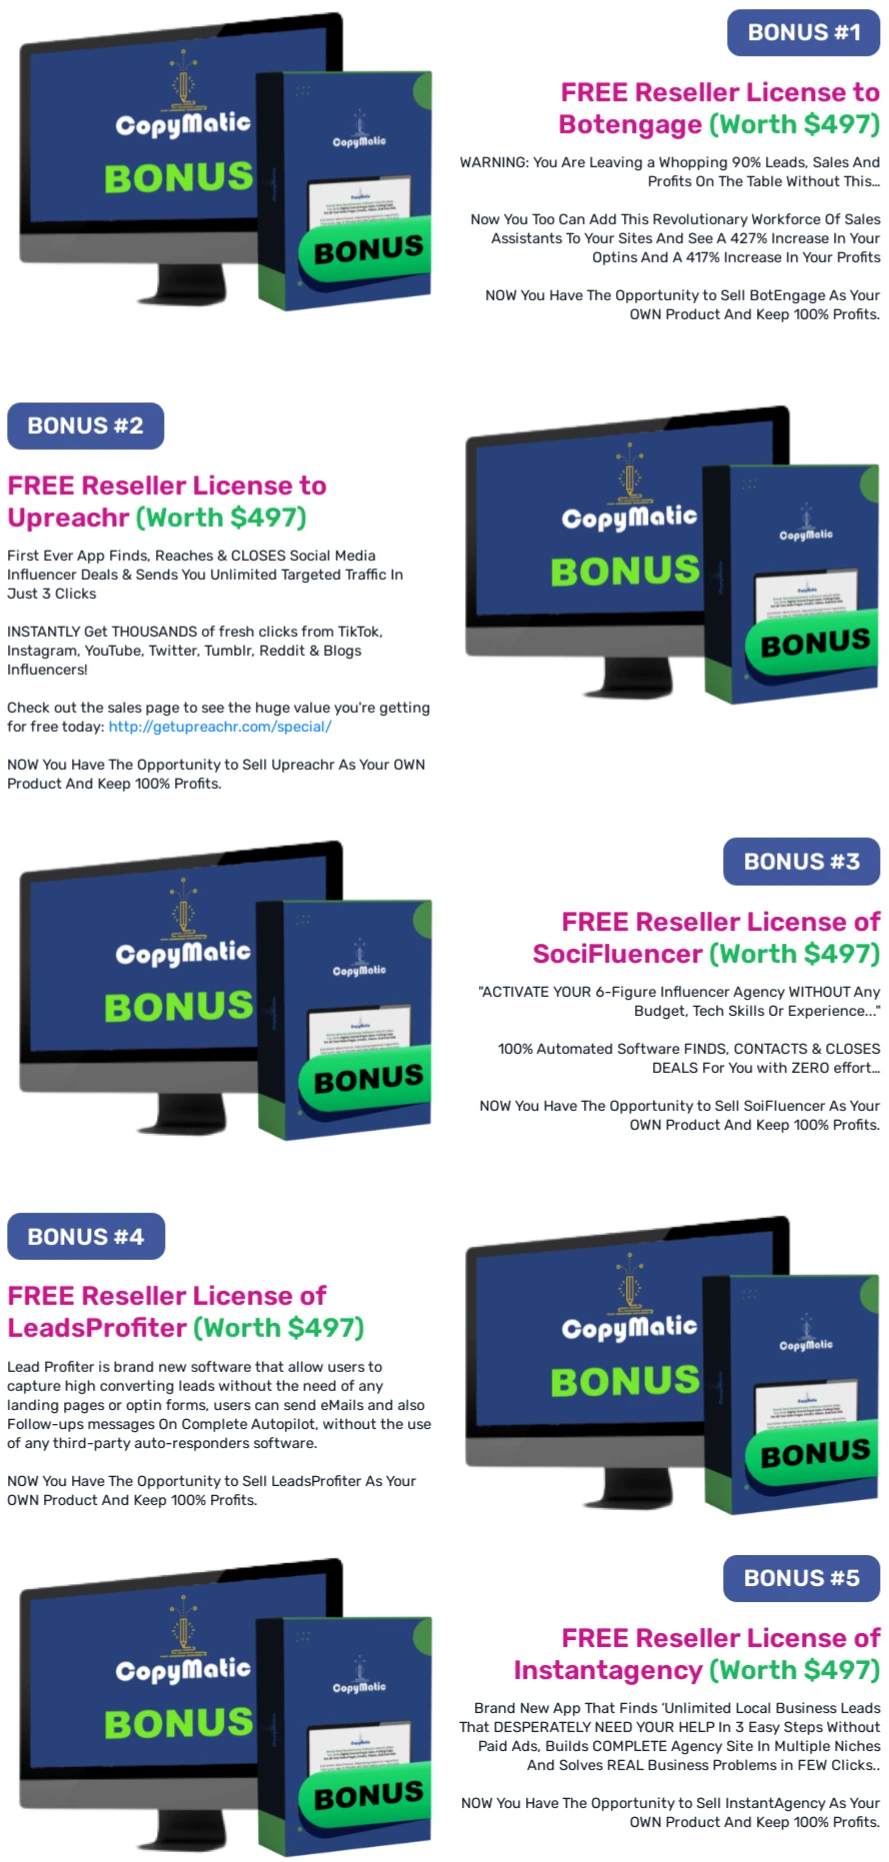 CopyMatic bonus